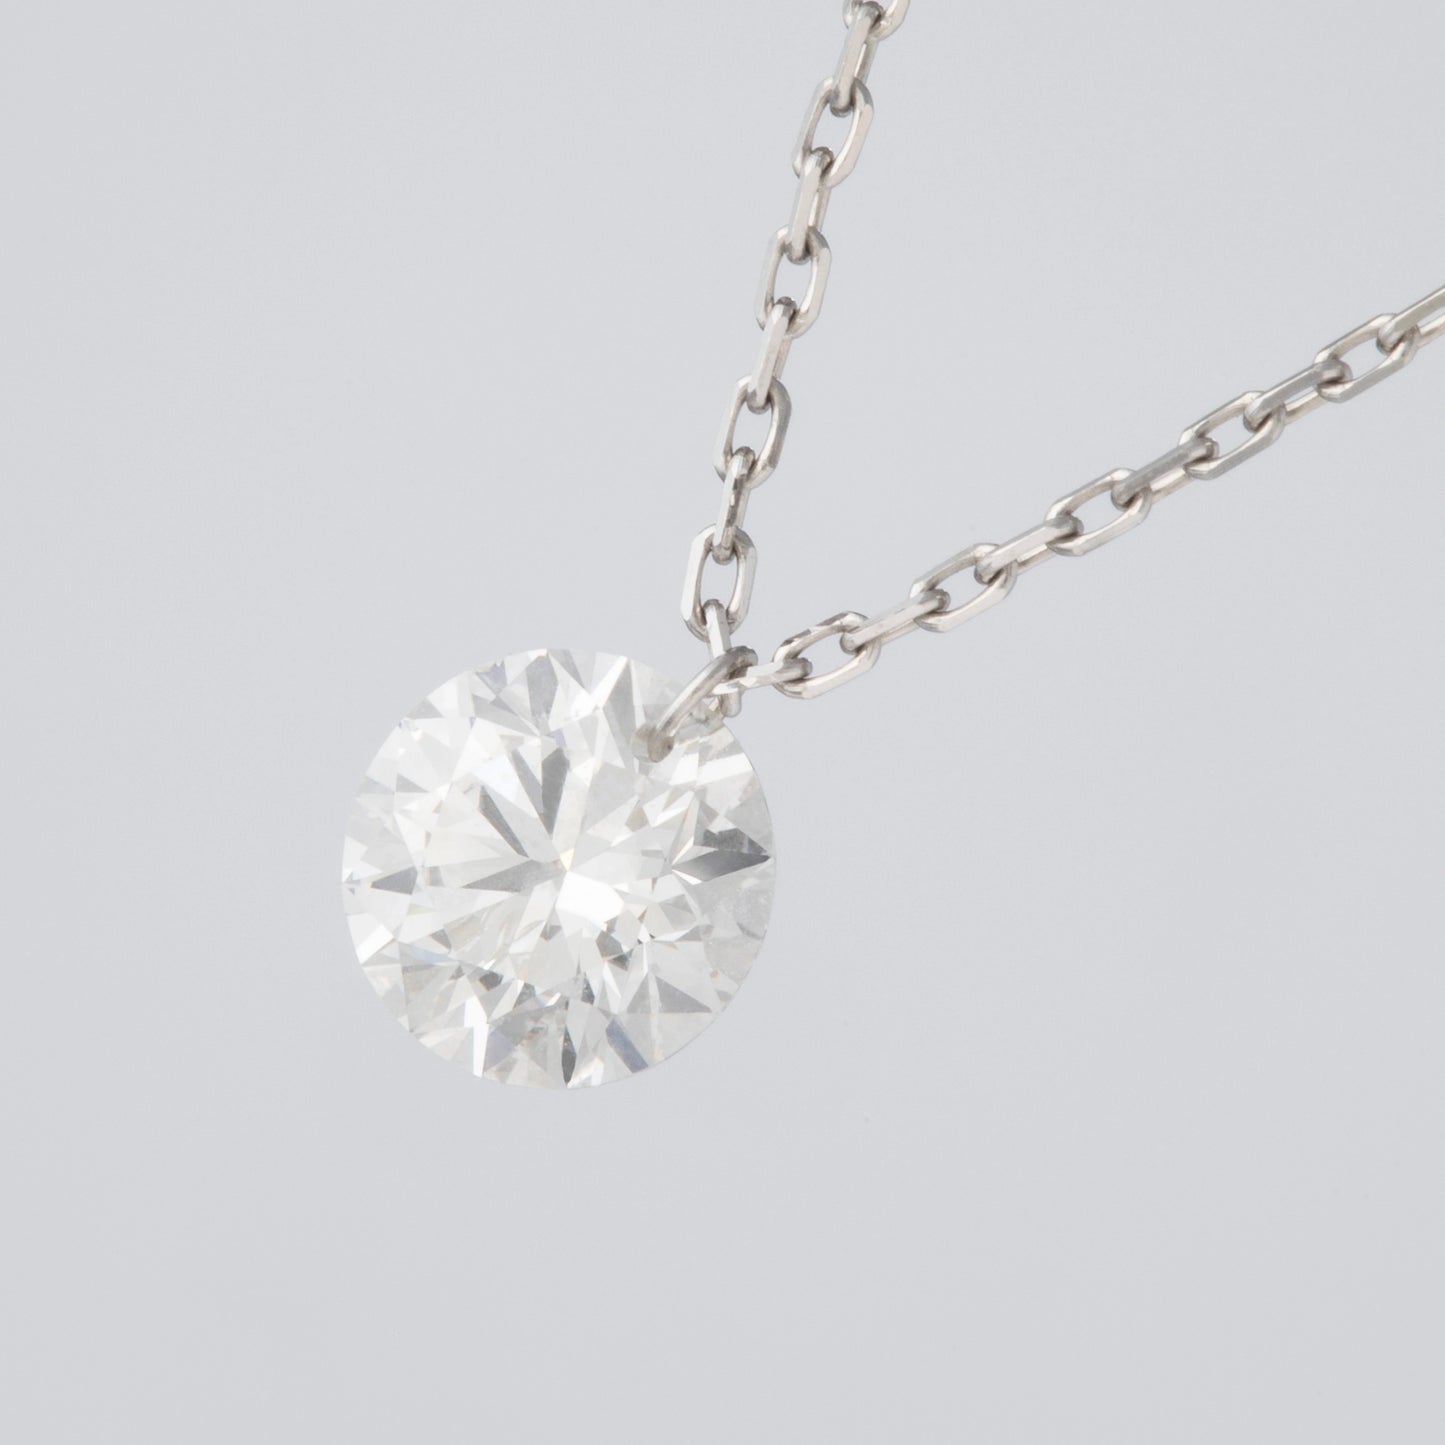 INNOCENCE 1 grain necklace / PT850 Platinum / 0.5 carat